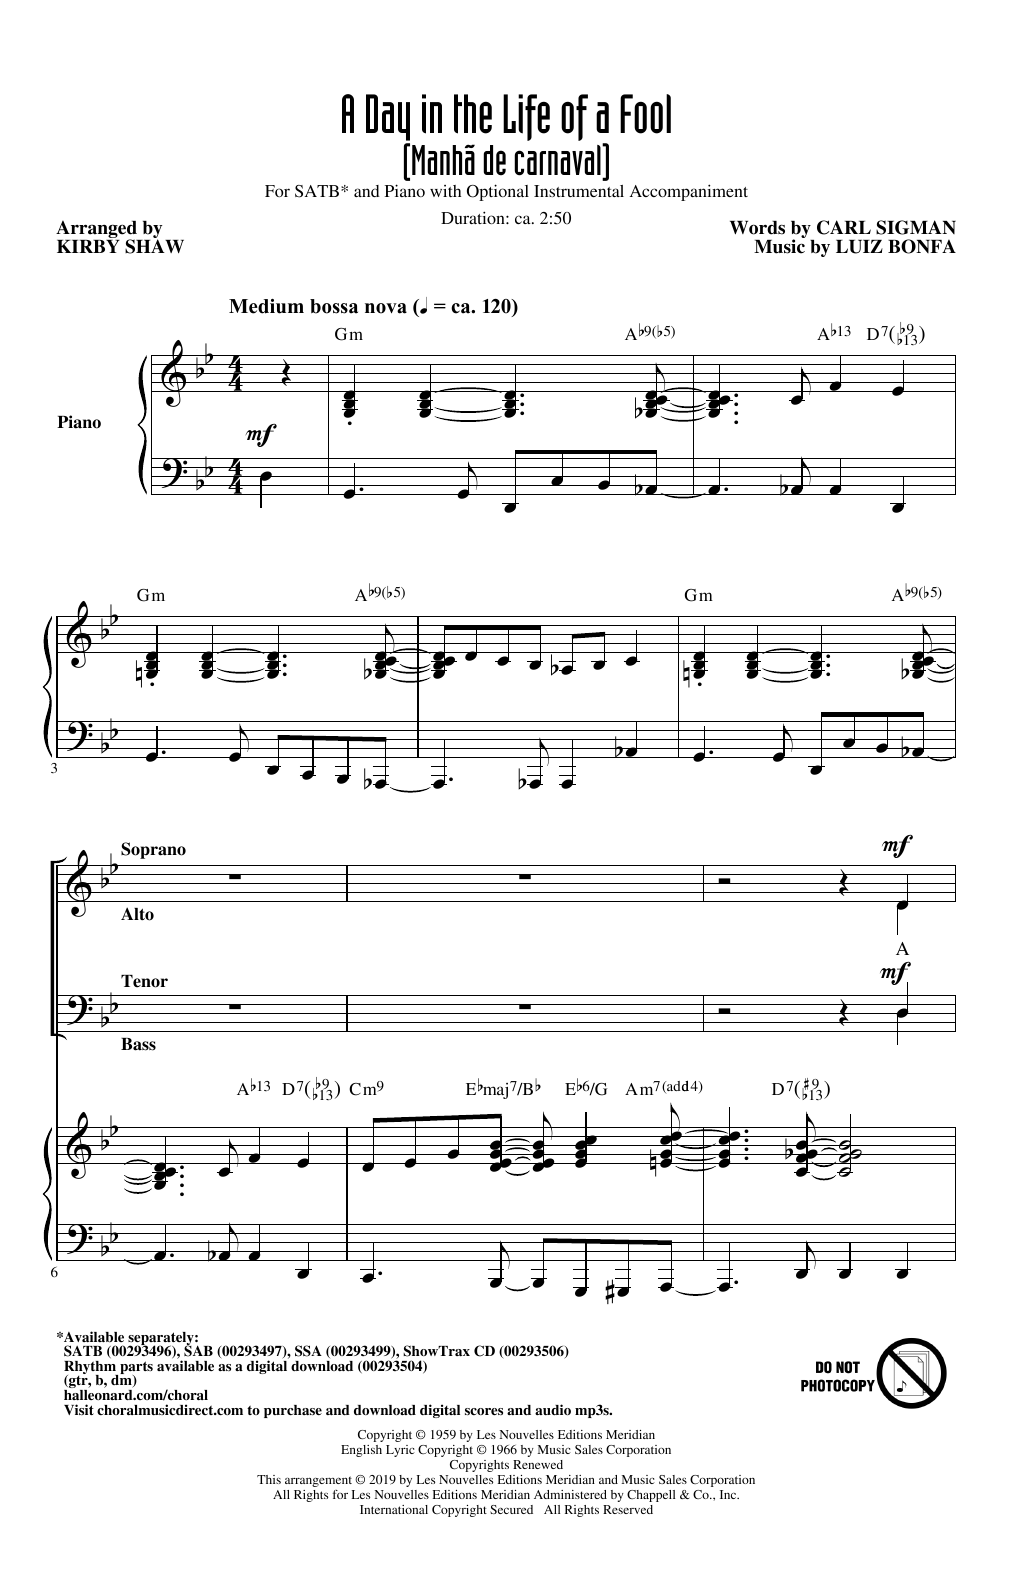 Carl Sigman & Luiz Bonfa A Day In The Life Of A Fool (Manha De Carnaval) (arr. Kirby Shaw) Sheet Music Notes & Chords for SSA Choir - Download or Print PDF